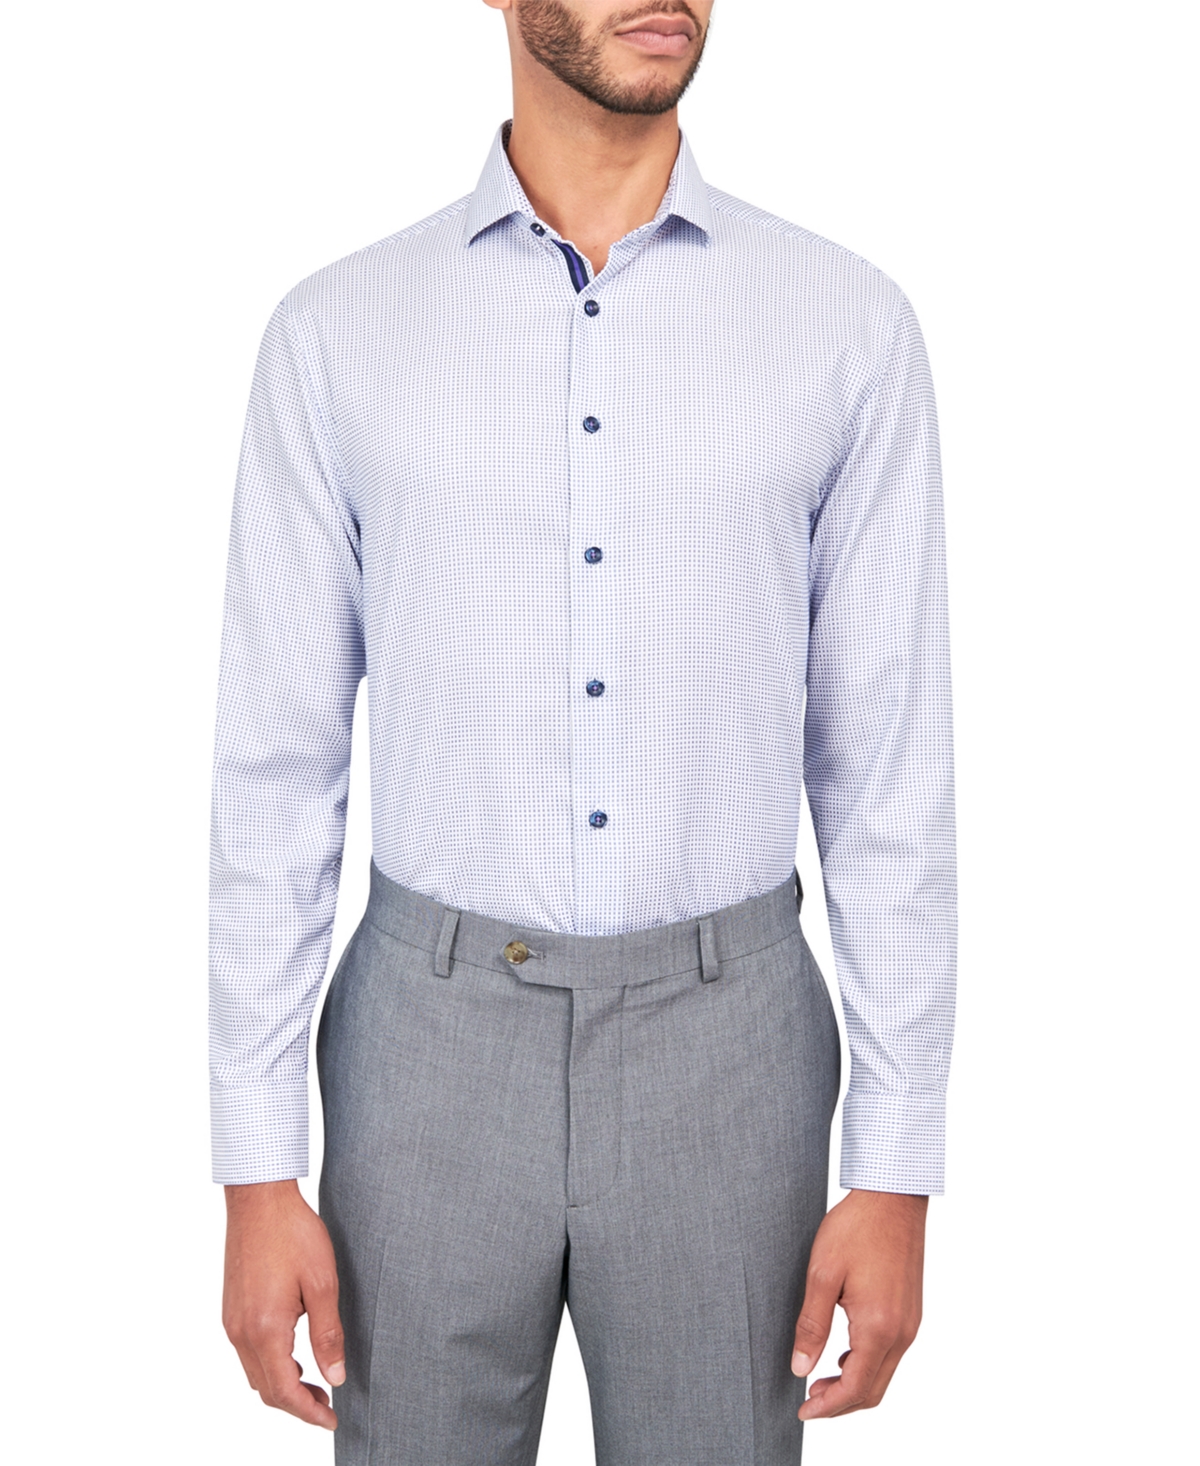 Men's Dobby Square Shirt - White/blue